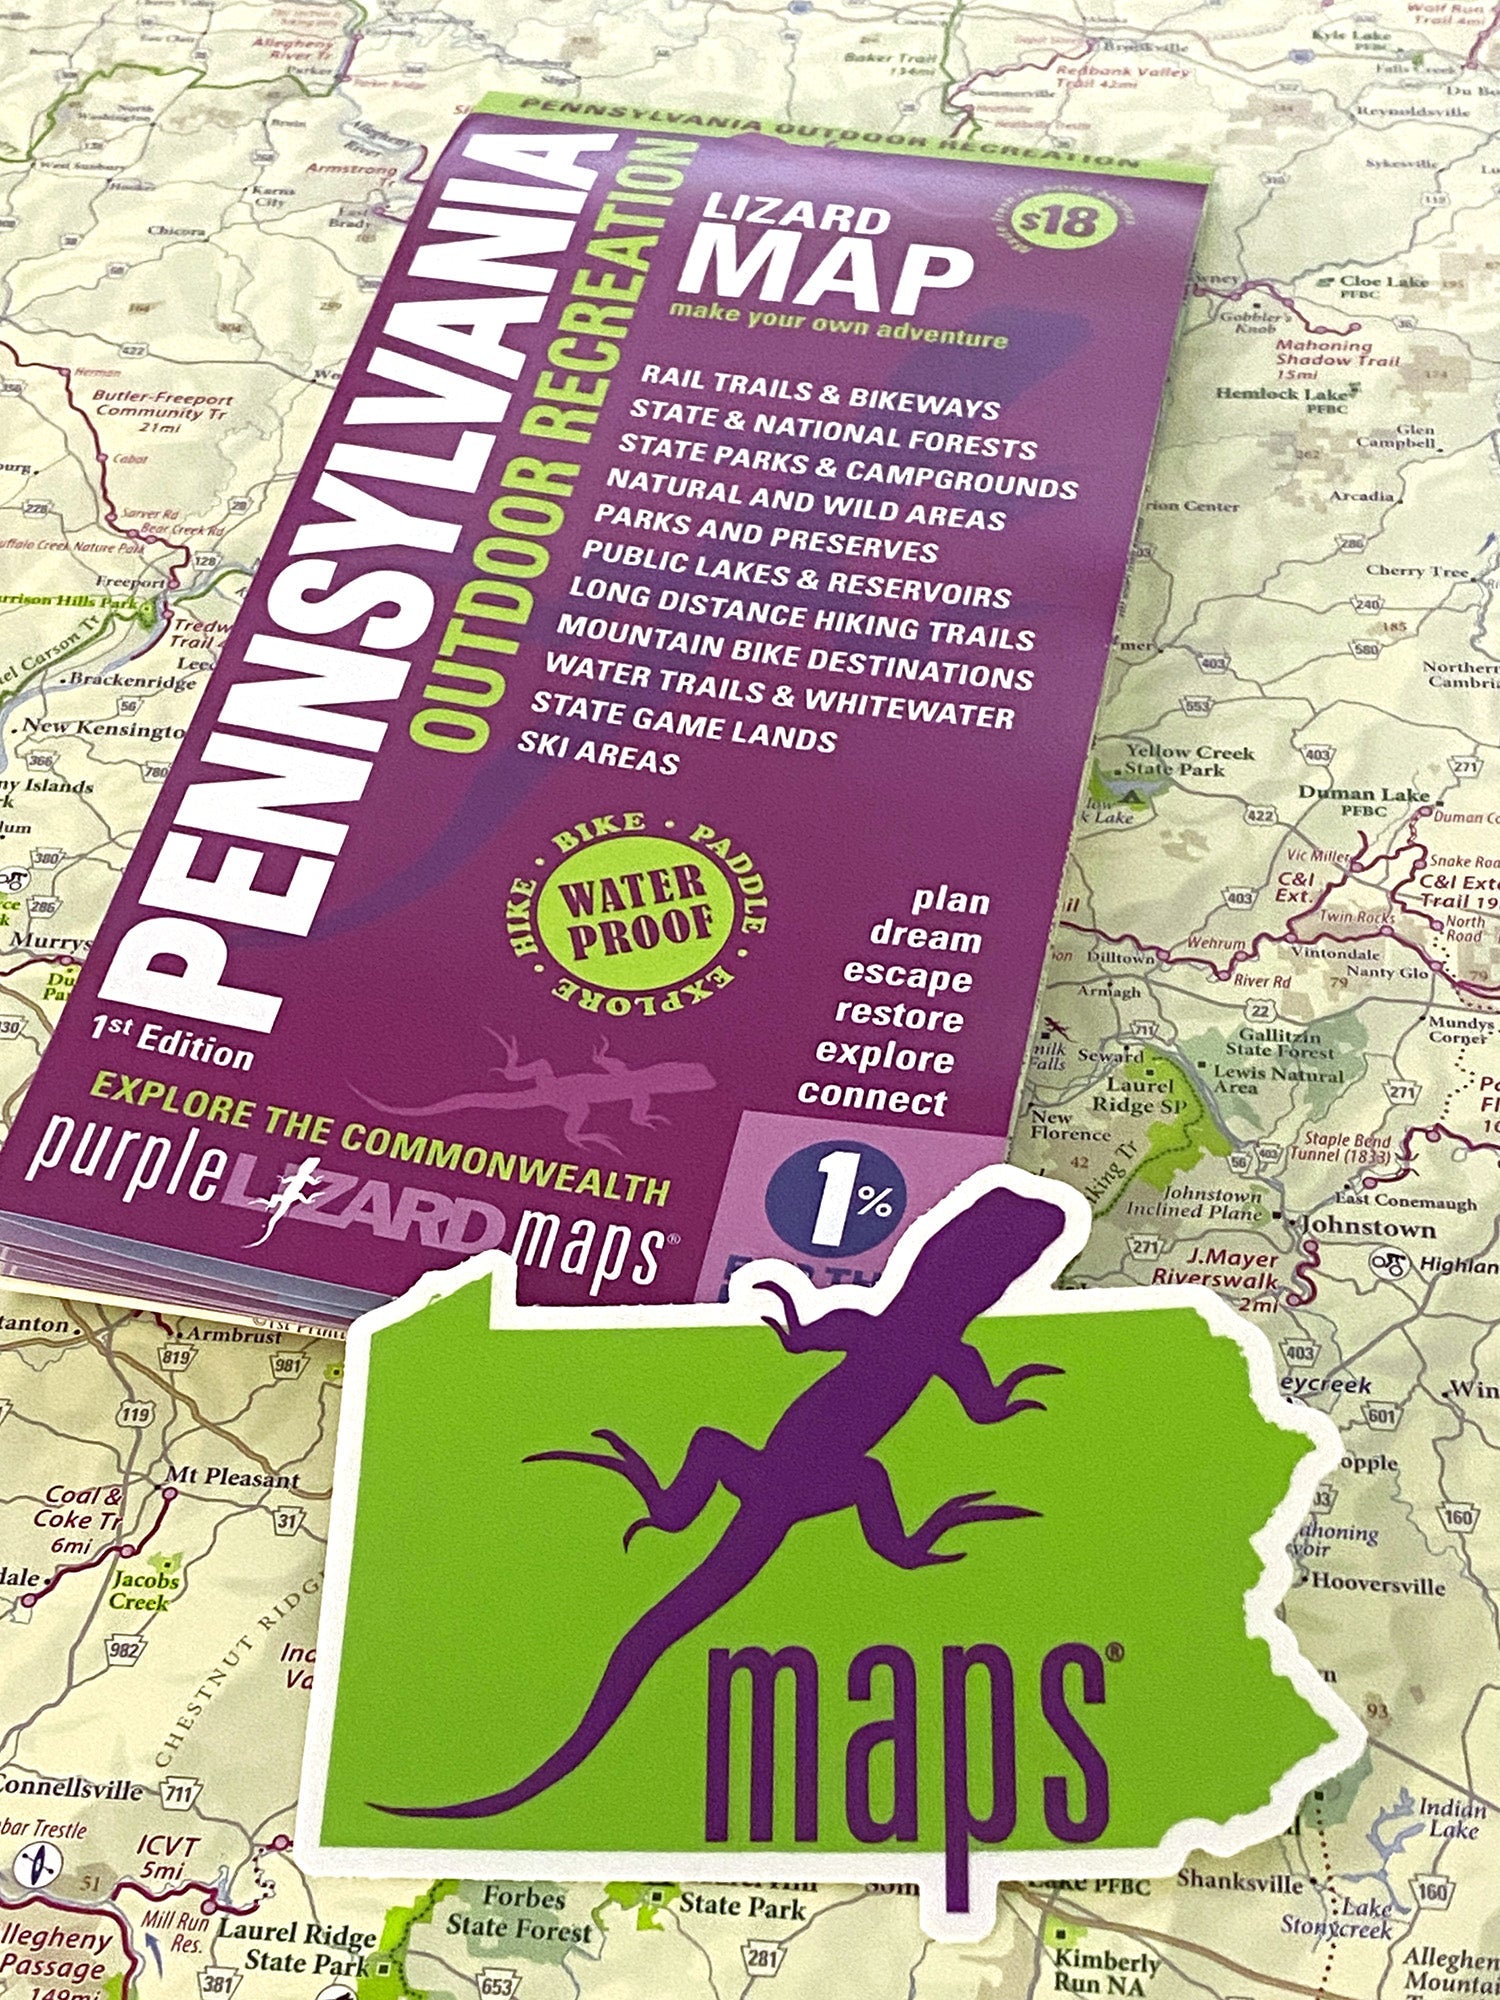 Pennsylvania Statewide Outdoor Recreation Purple Lizard Map